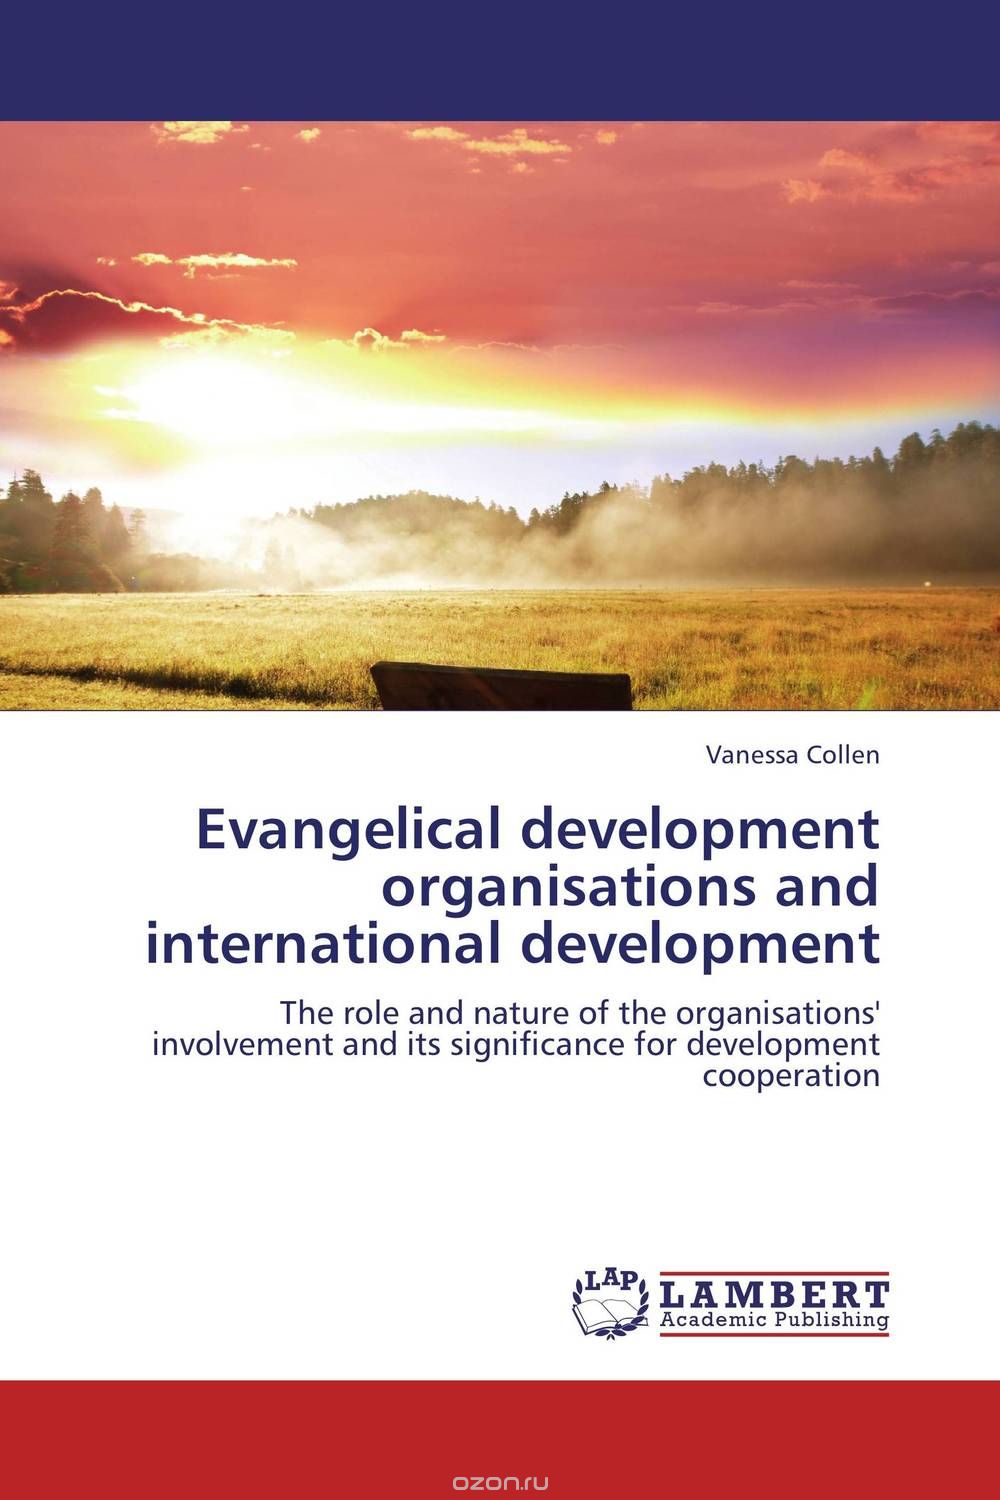 Скачать книгу "Evangelical development organisations and international development"